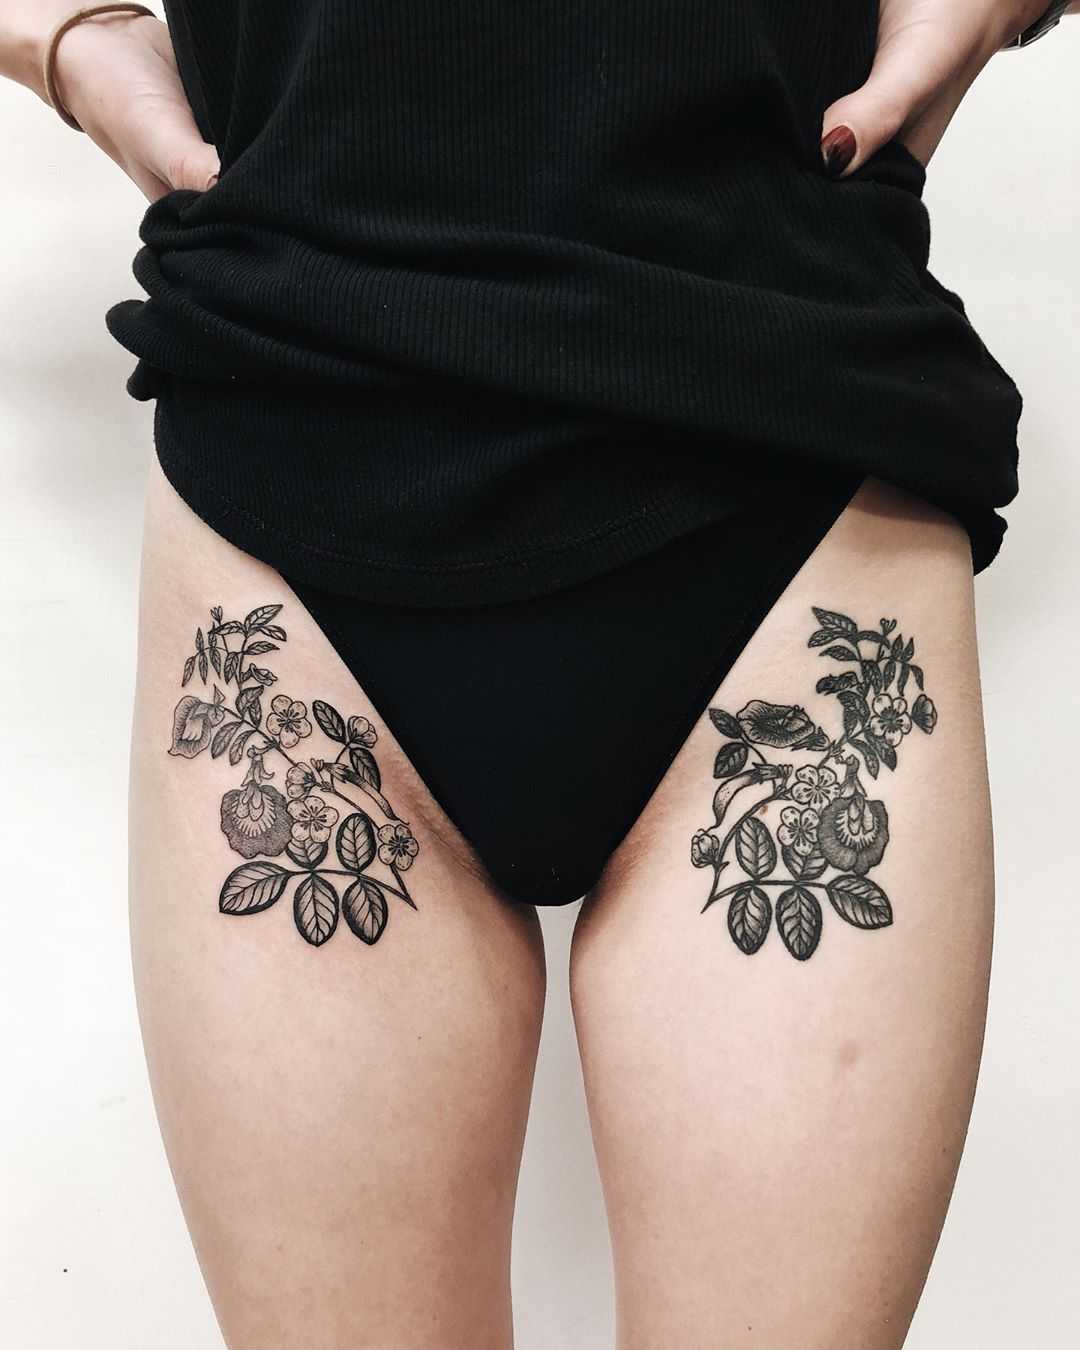 Matching flower tattoos on both hips